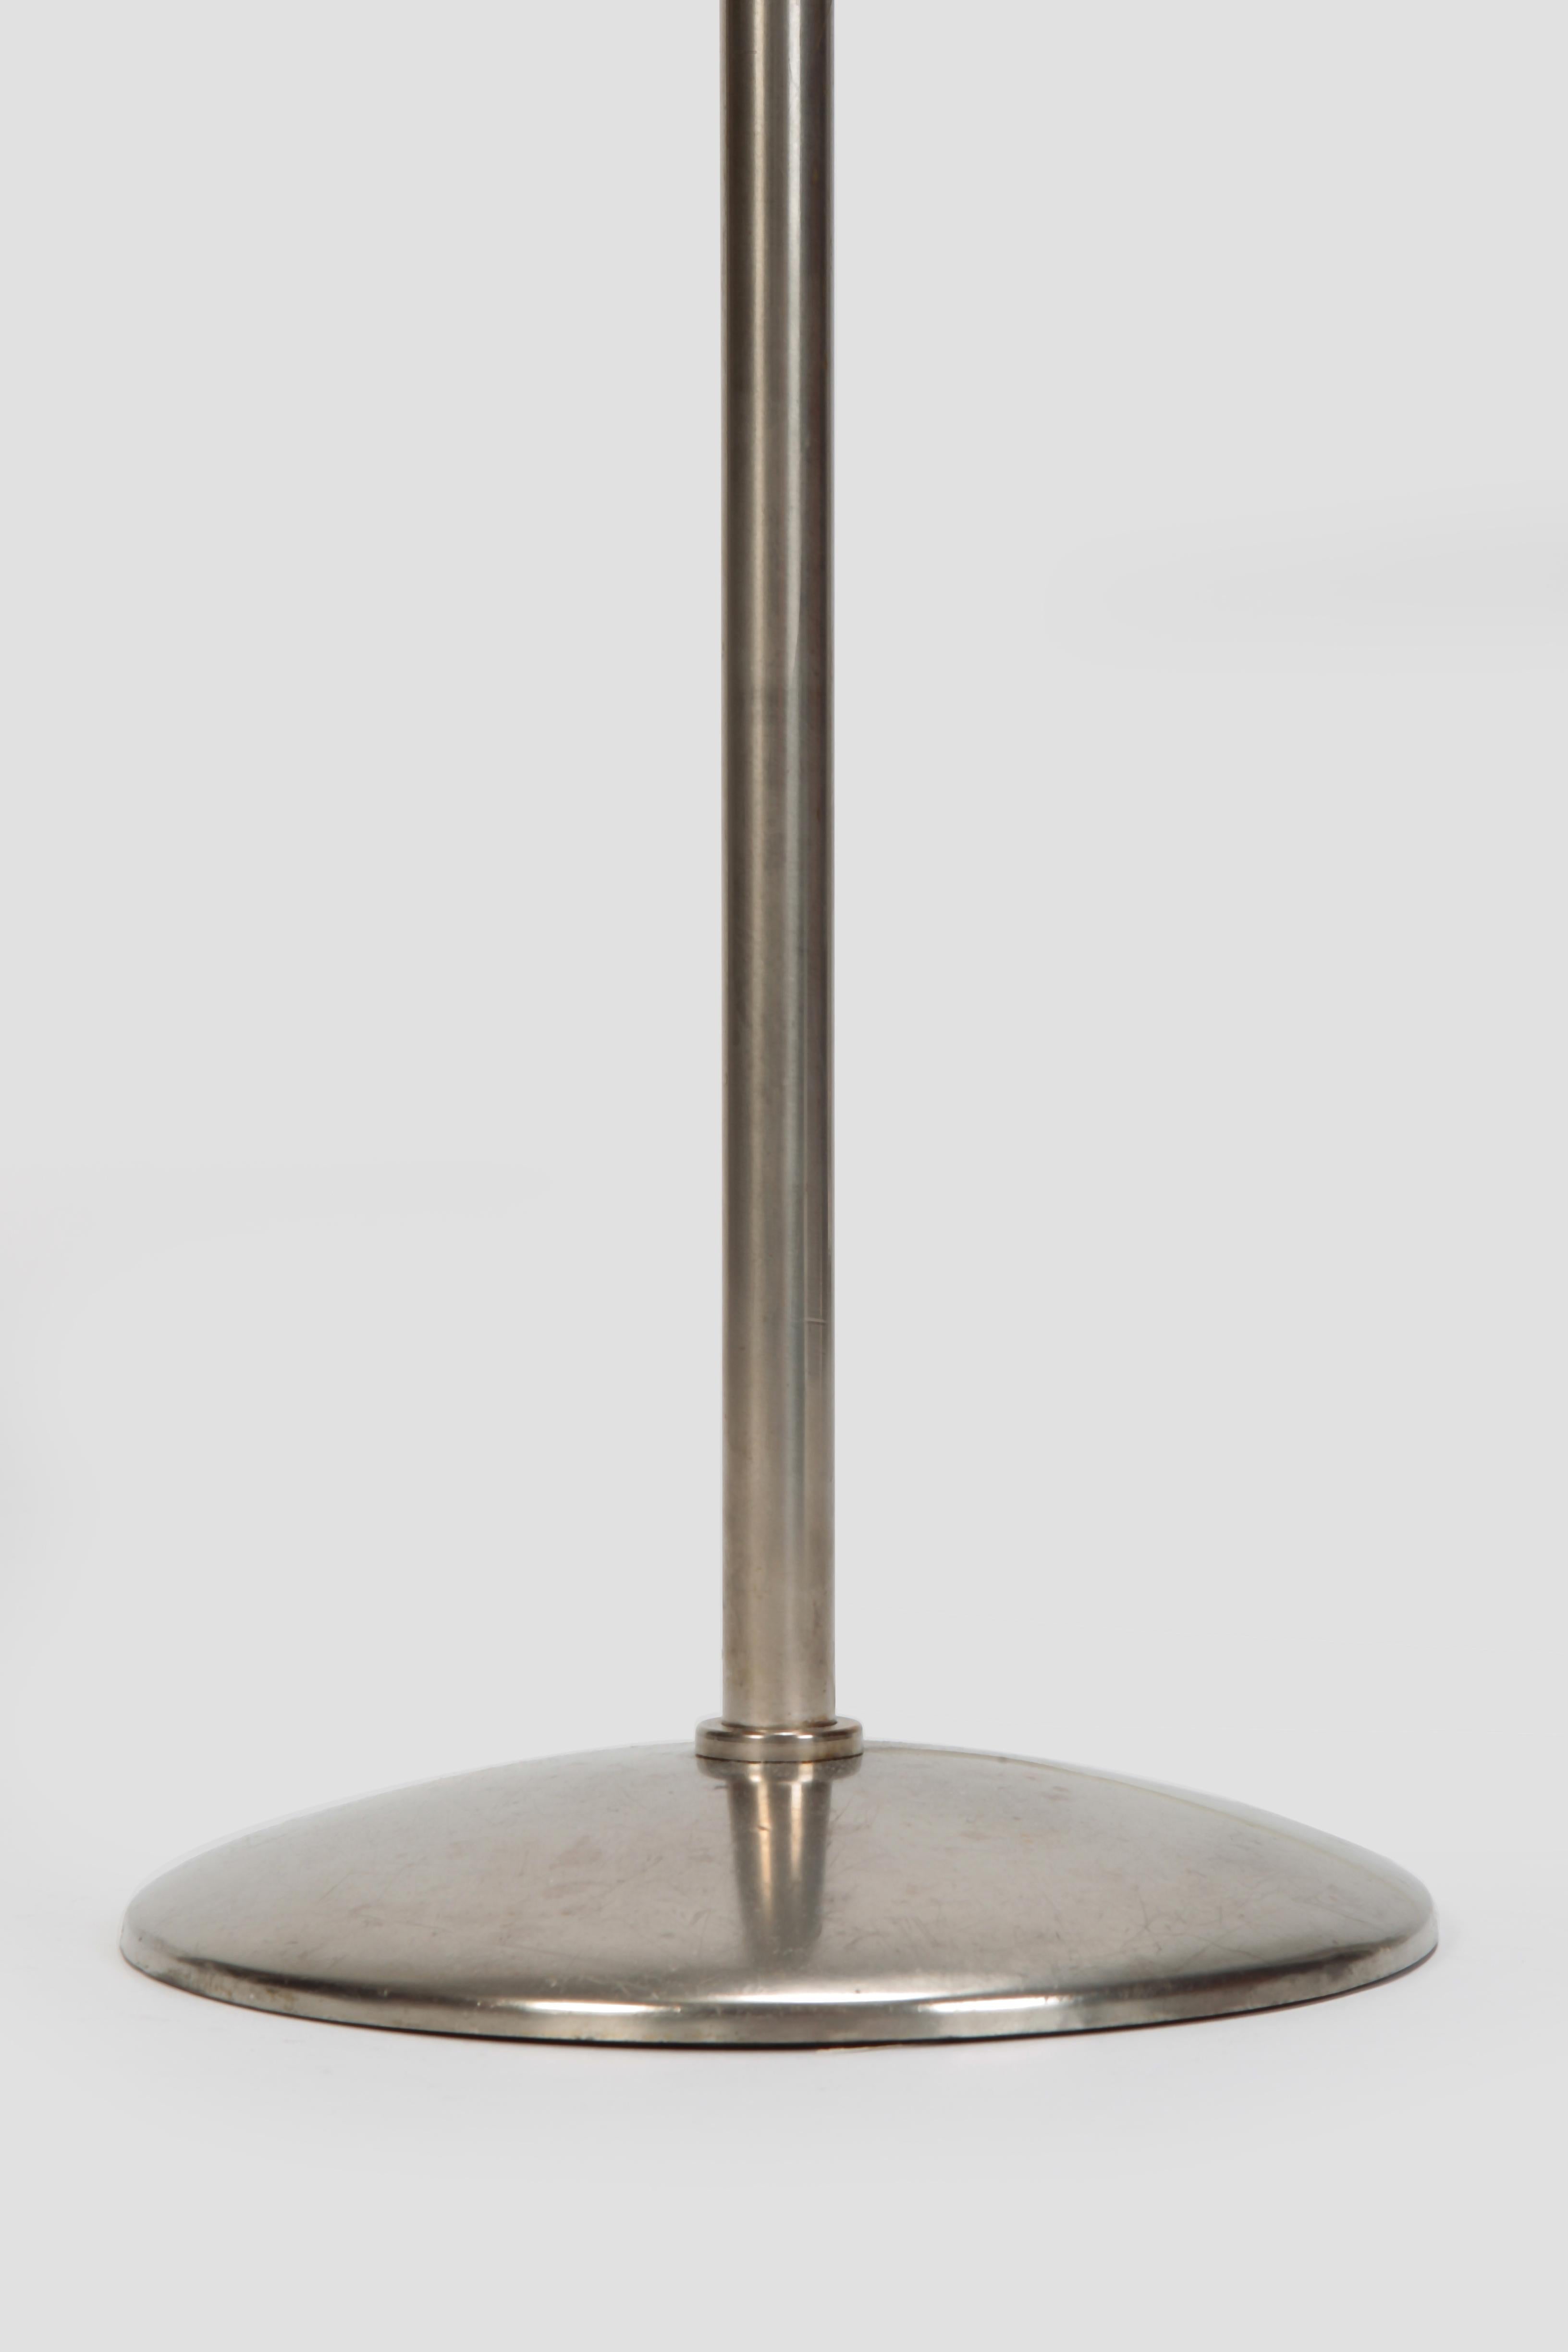 Sigfried Giedion Floor Lamp BAG Turgi, 1940s For Sale 5